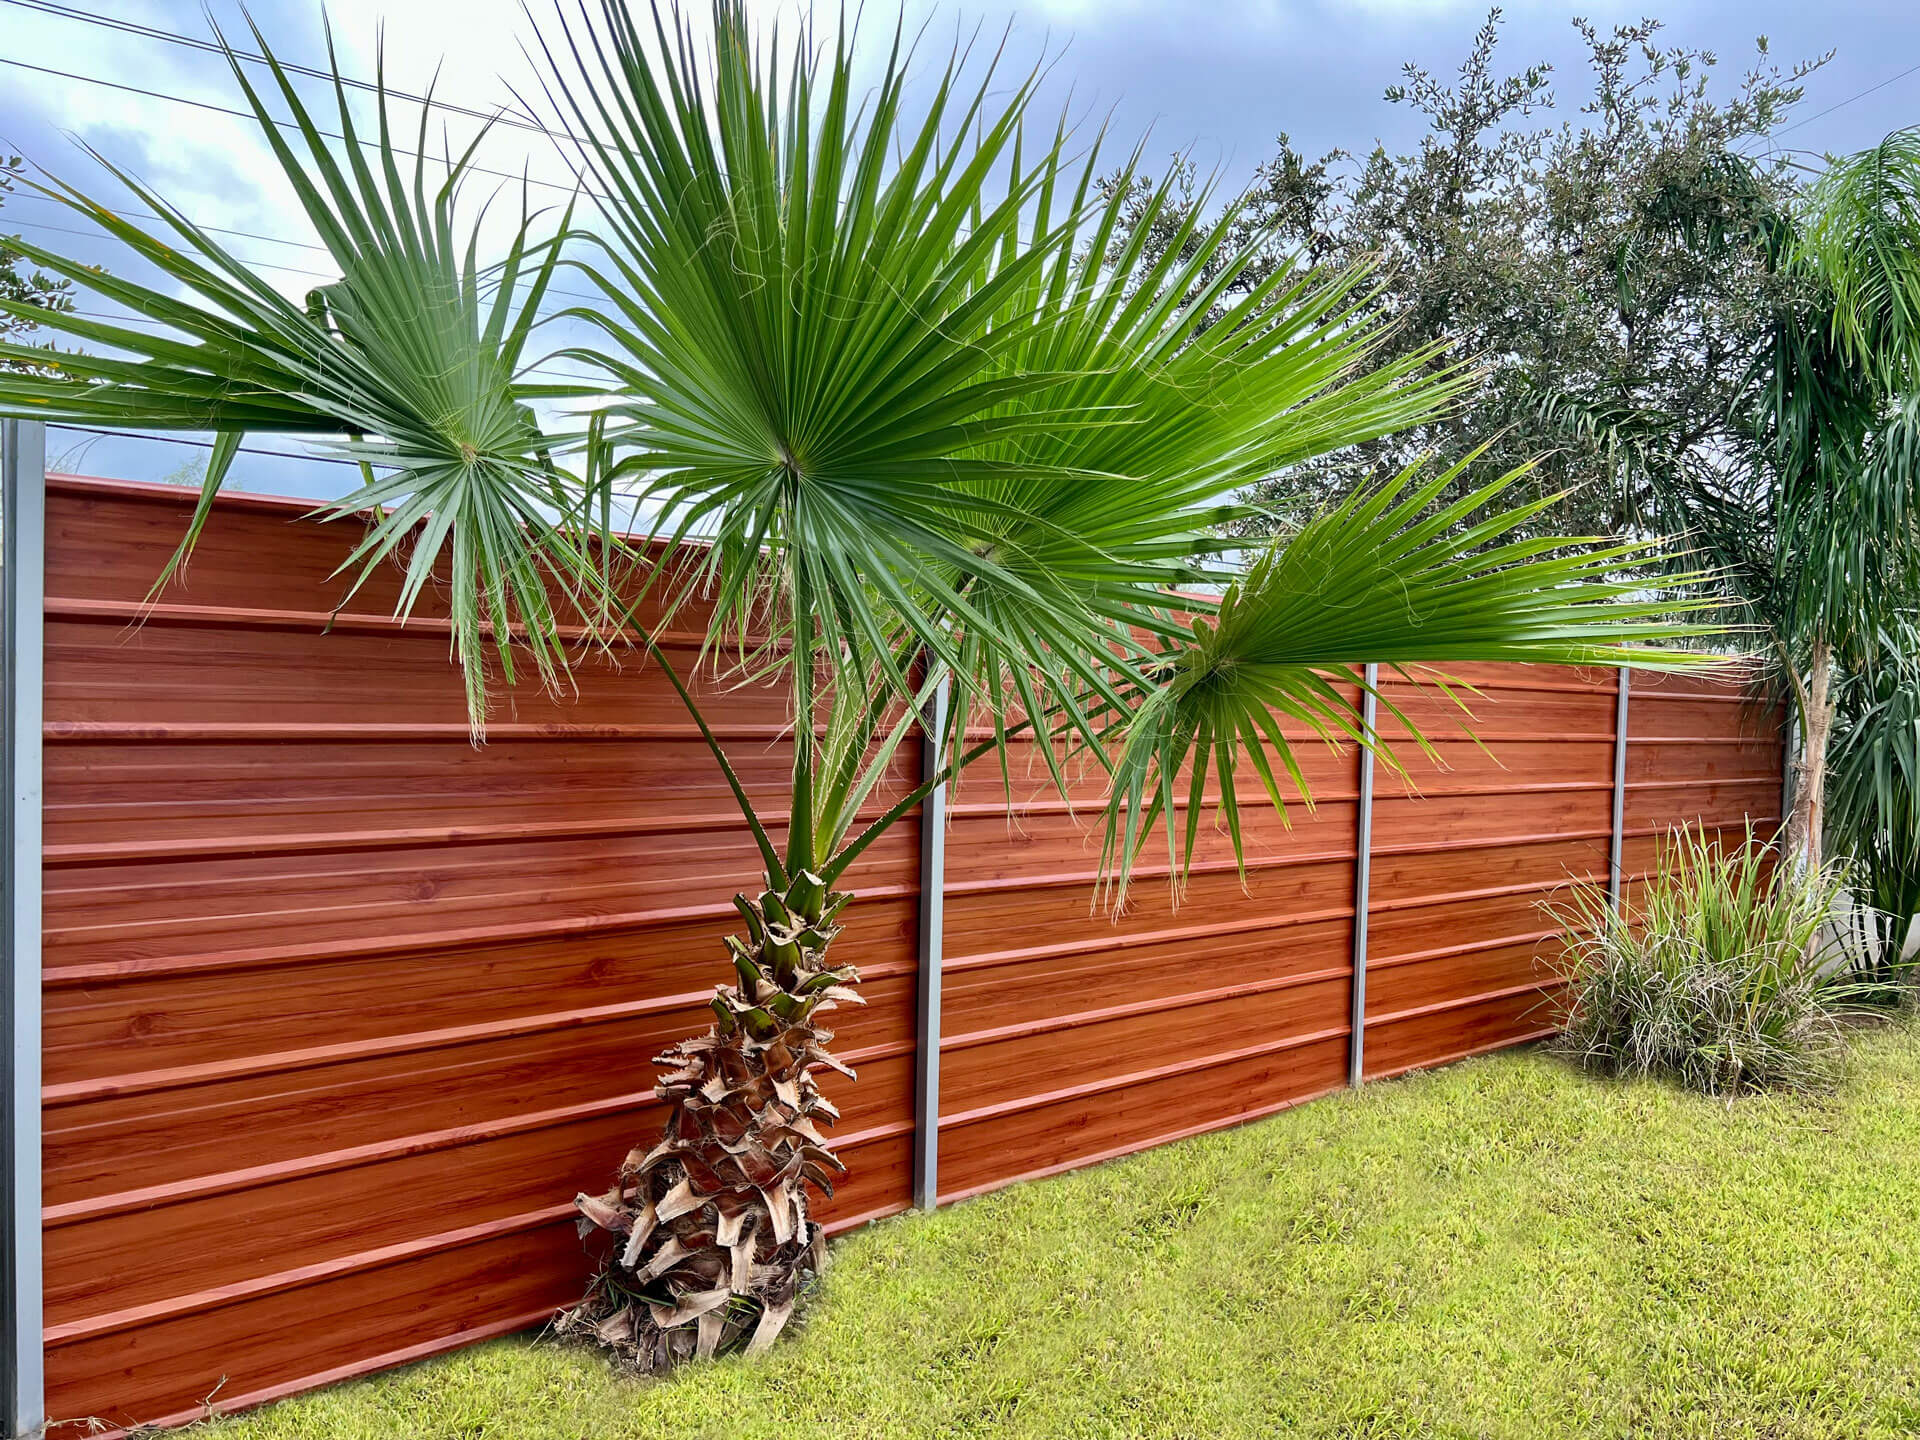 FenSteel - Backyard Metal Fence in Wood Like Color